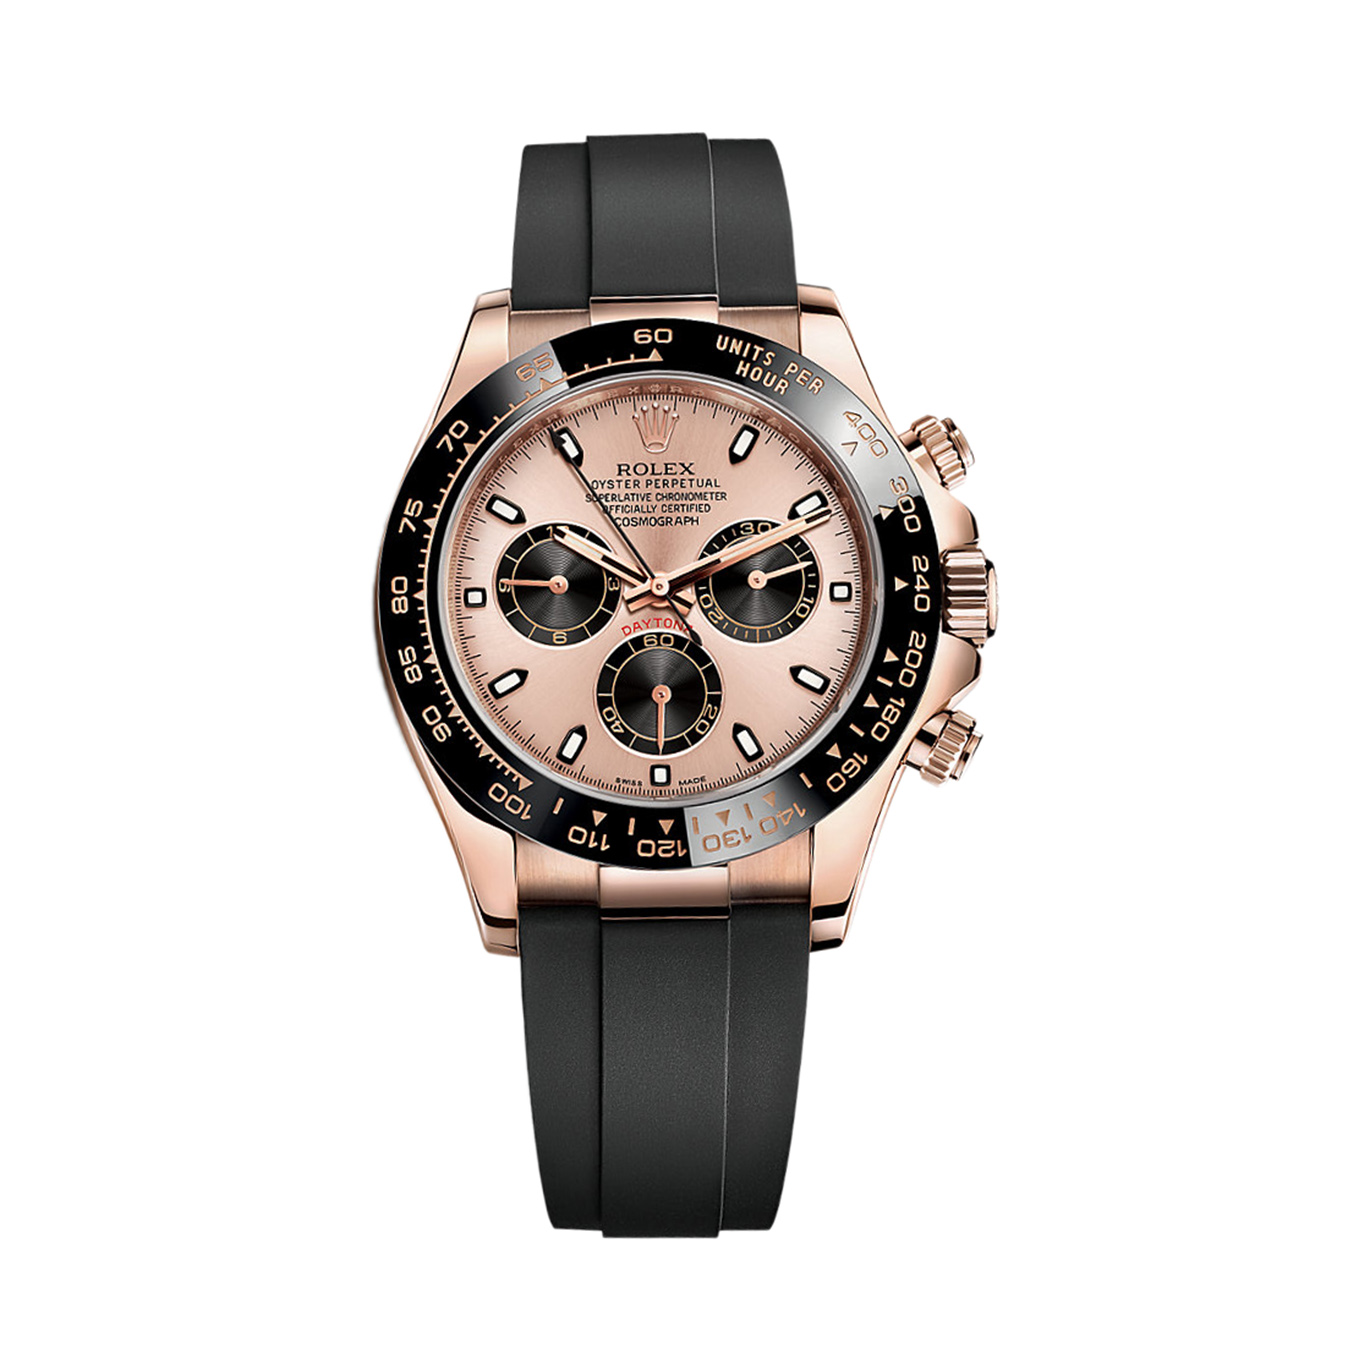 Cosmograph Daytona 116515LN Rose Gold Watch (Pink & Black)